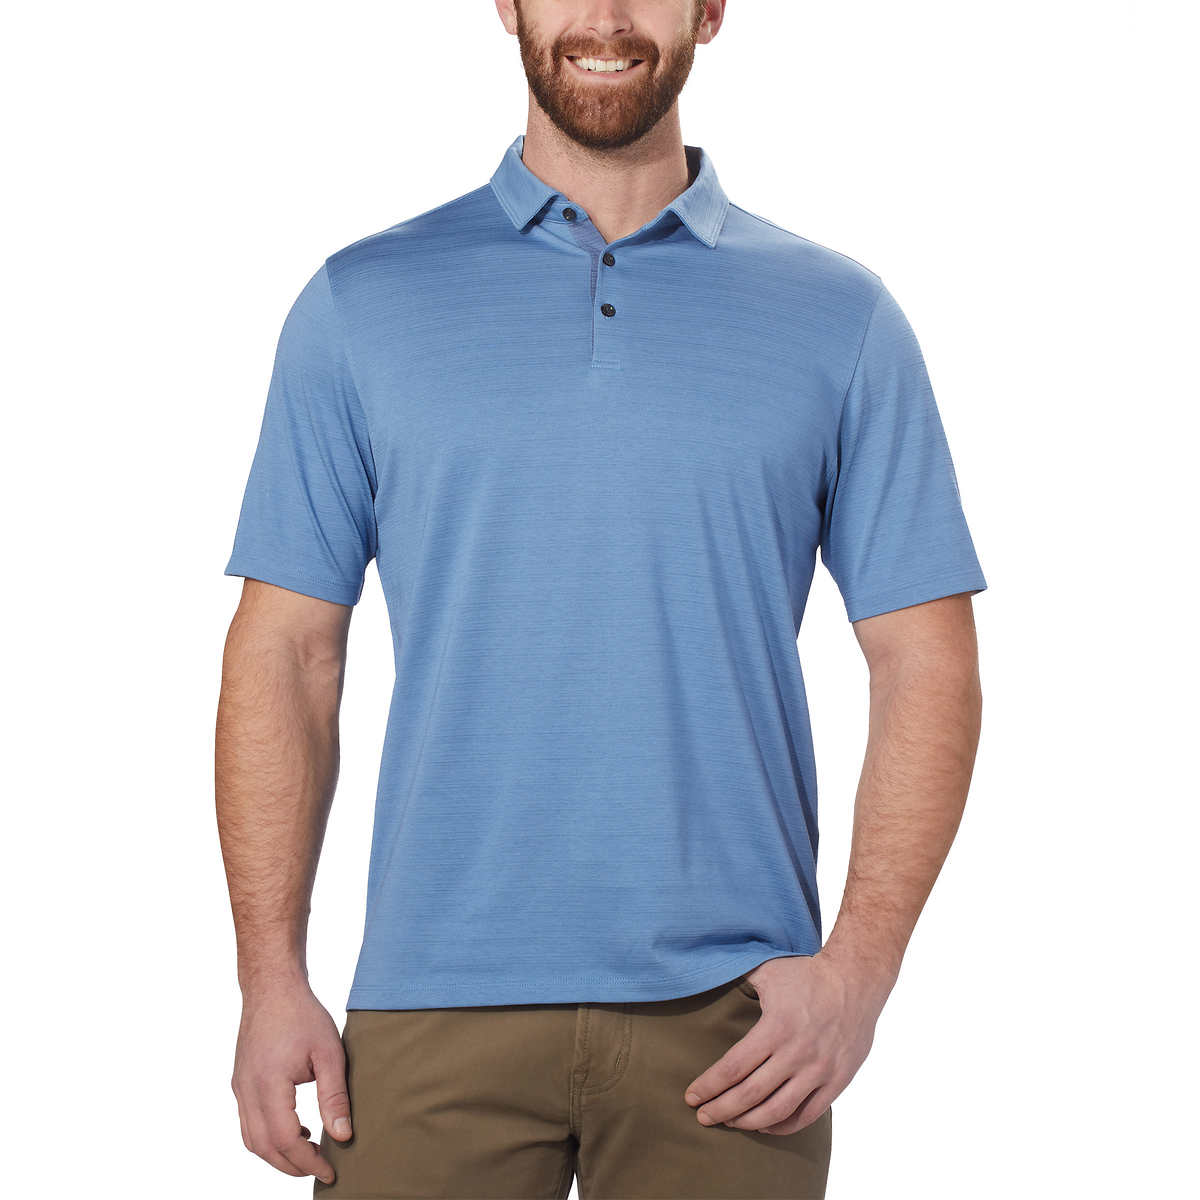 Kirkland Signature Men's Cotton Poly Polo Shirt (Light Blue, XL)